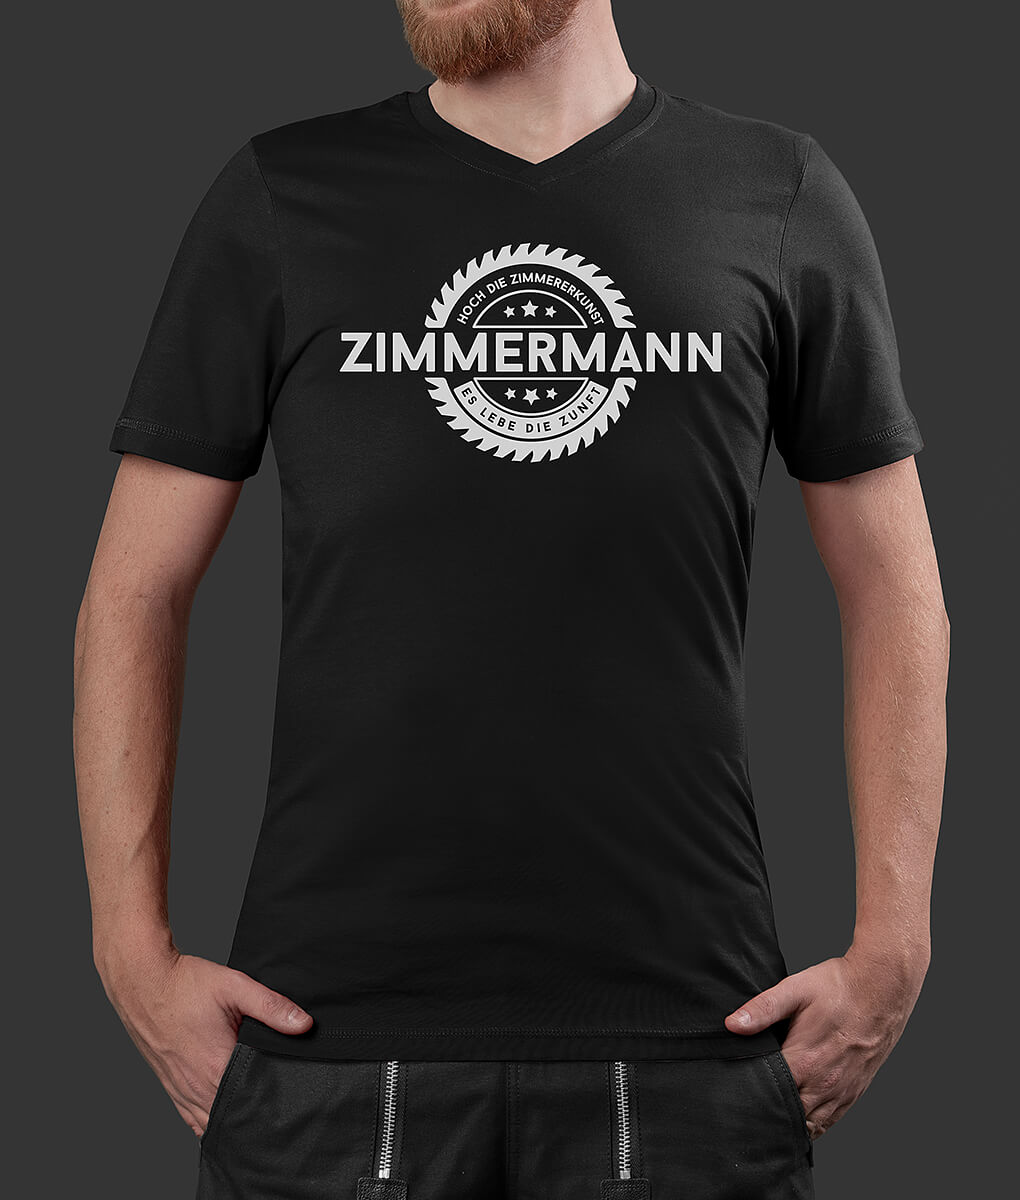 T-Shirt Philipp Säge Zimmermann